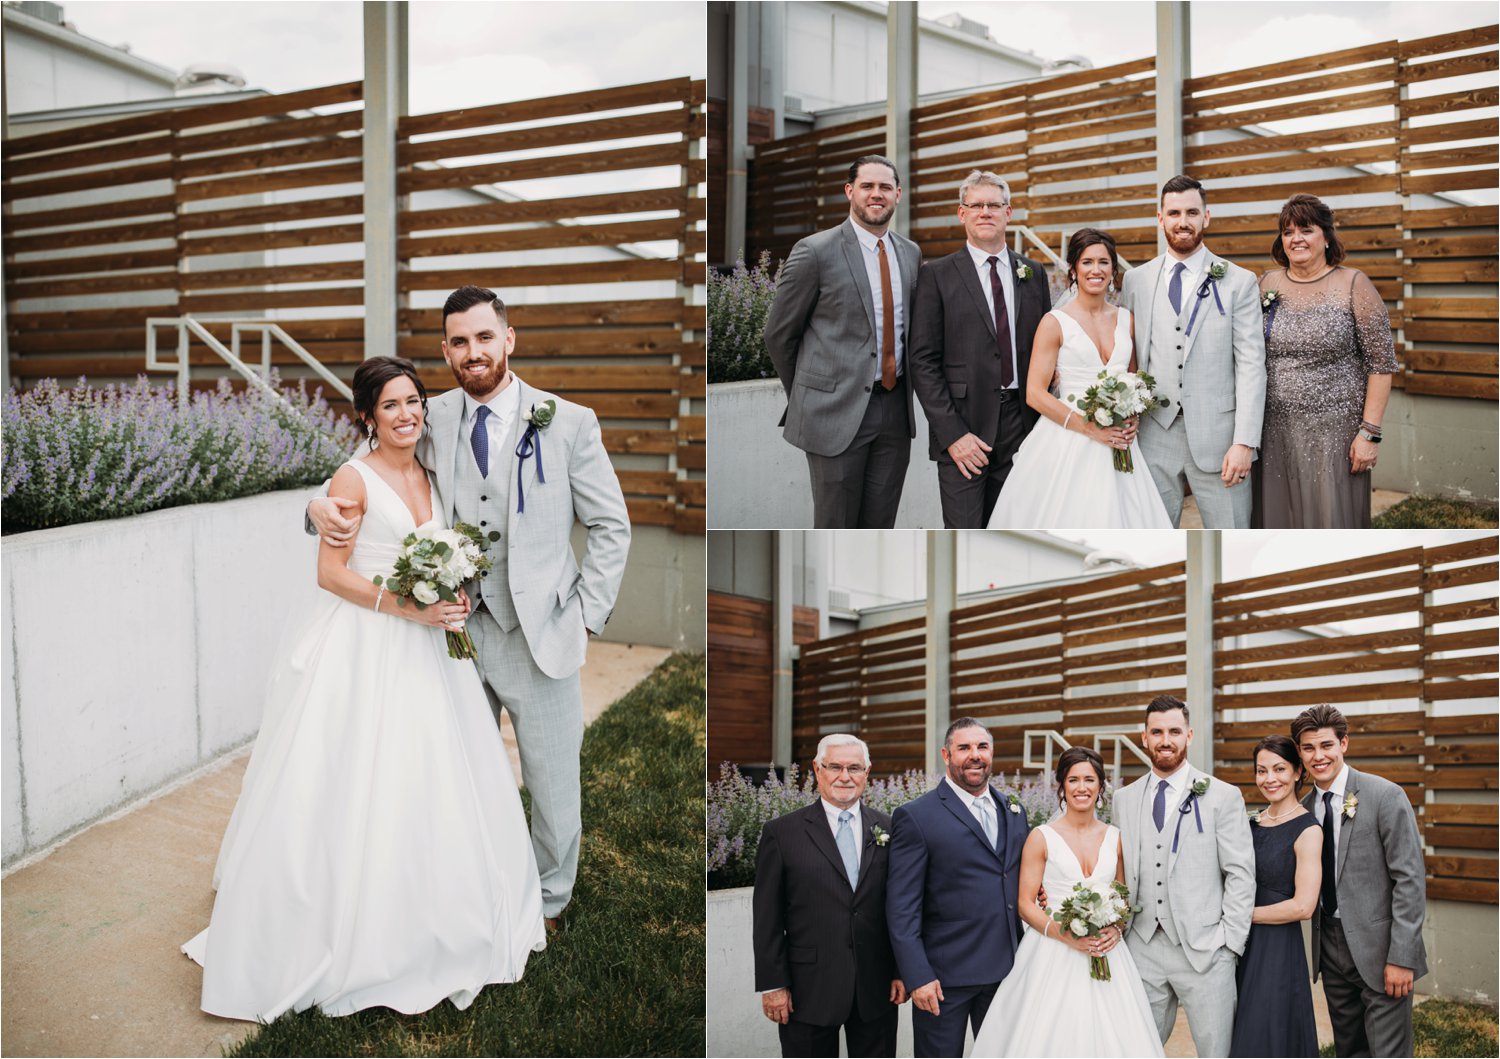  images by feliciathephotographer.com | destination wedding photographer | kansas city | spring time | family portraits | modern | satin a line gown | david's bridal | grey suit | the black tux | contrast | 